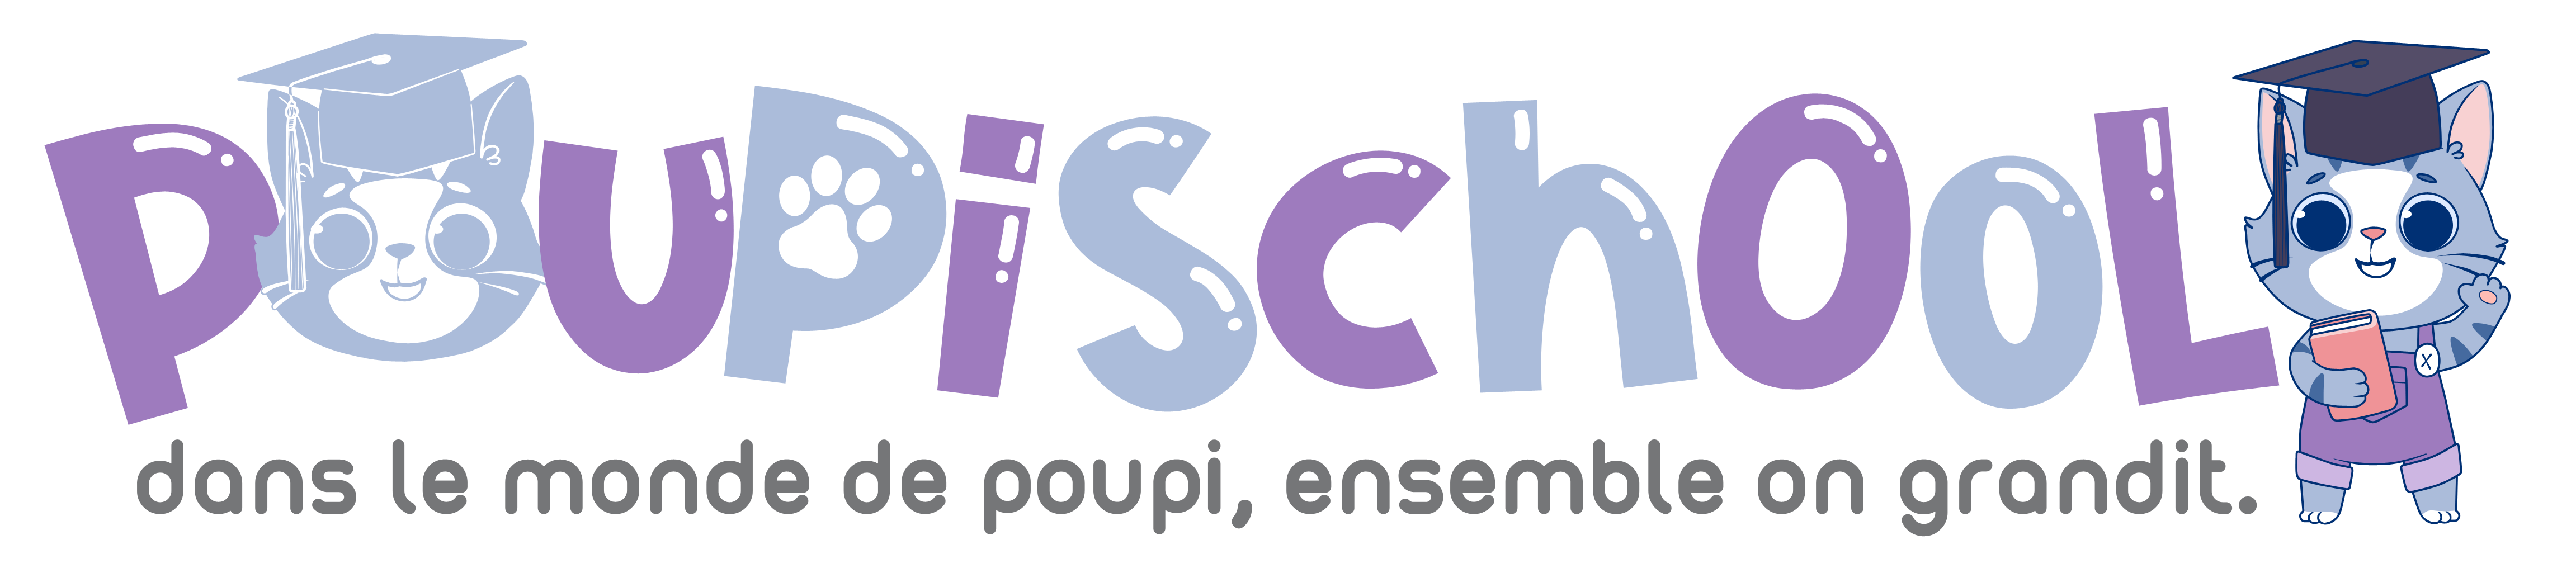 PoupiSchool Logo